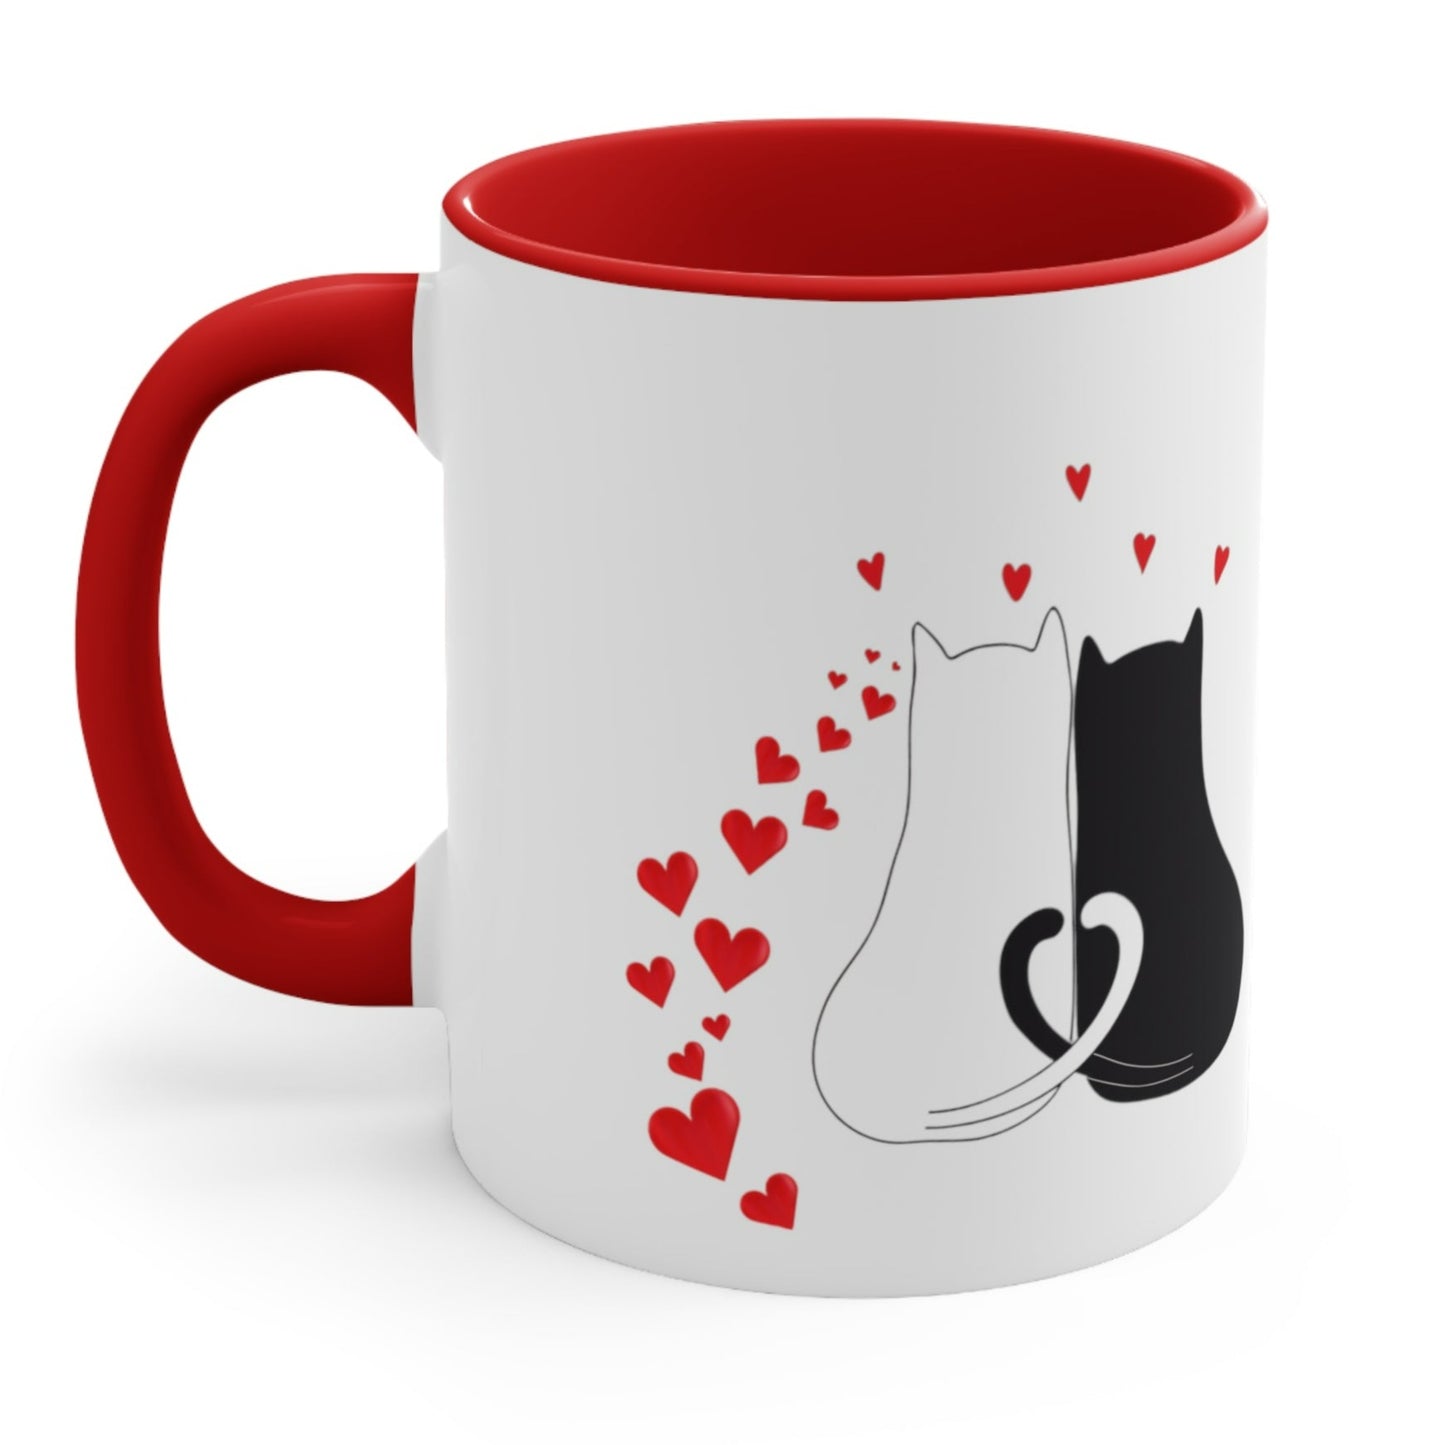 LOVE MUG - VALENTINES DAY - ANNIVERSARY - COFFEE MUGS